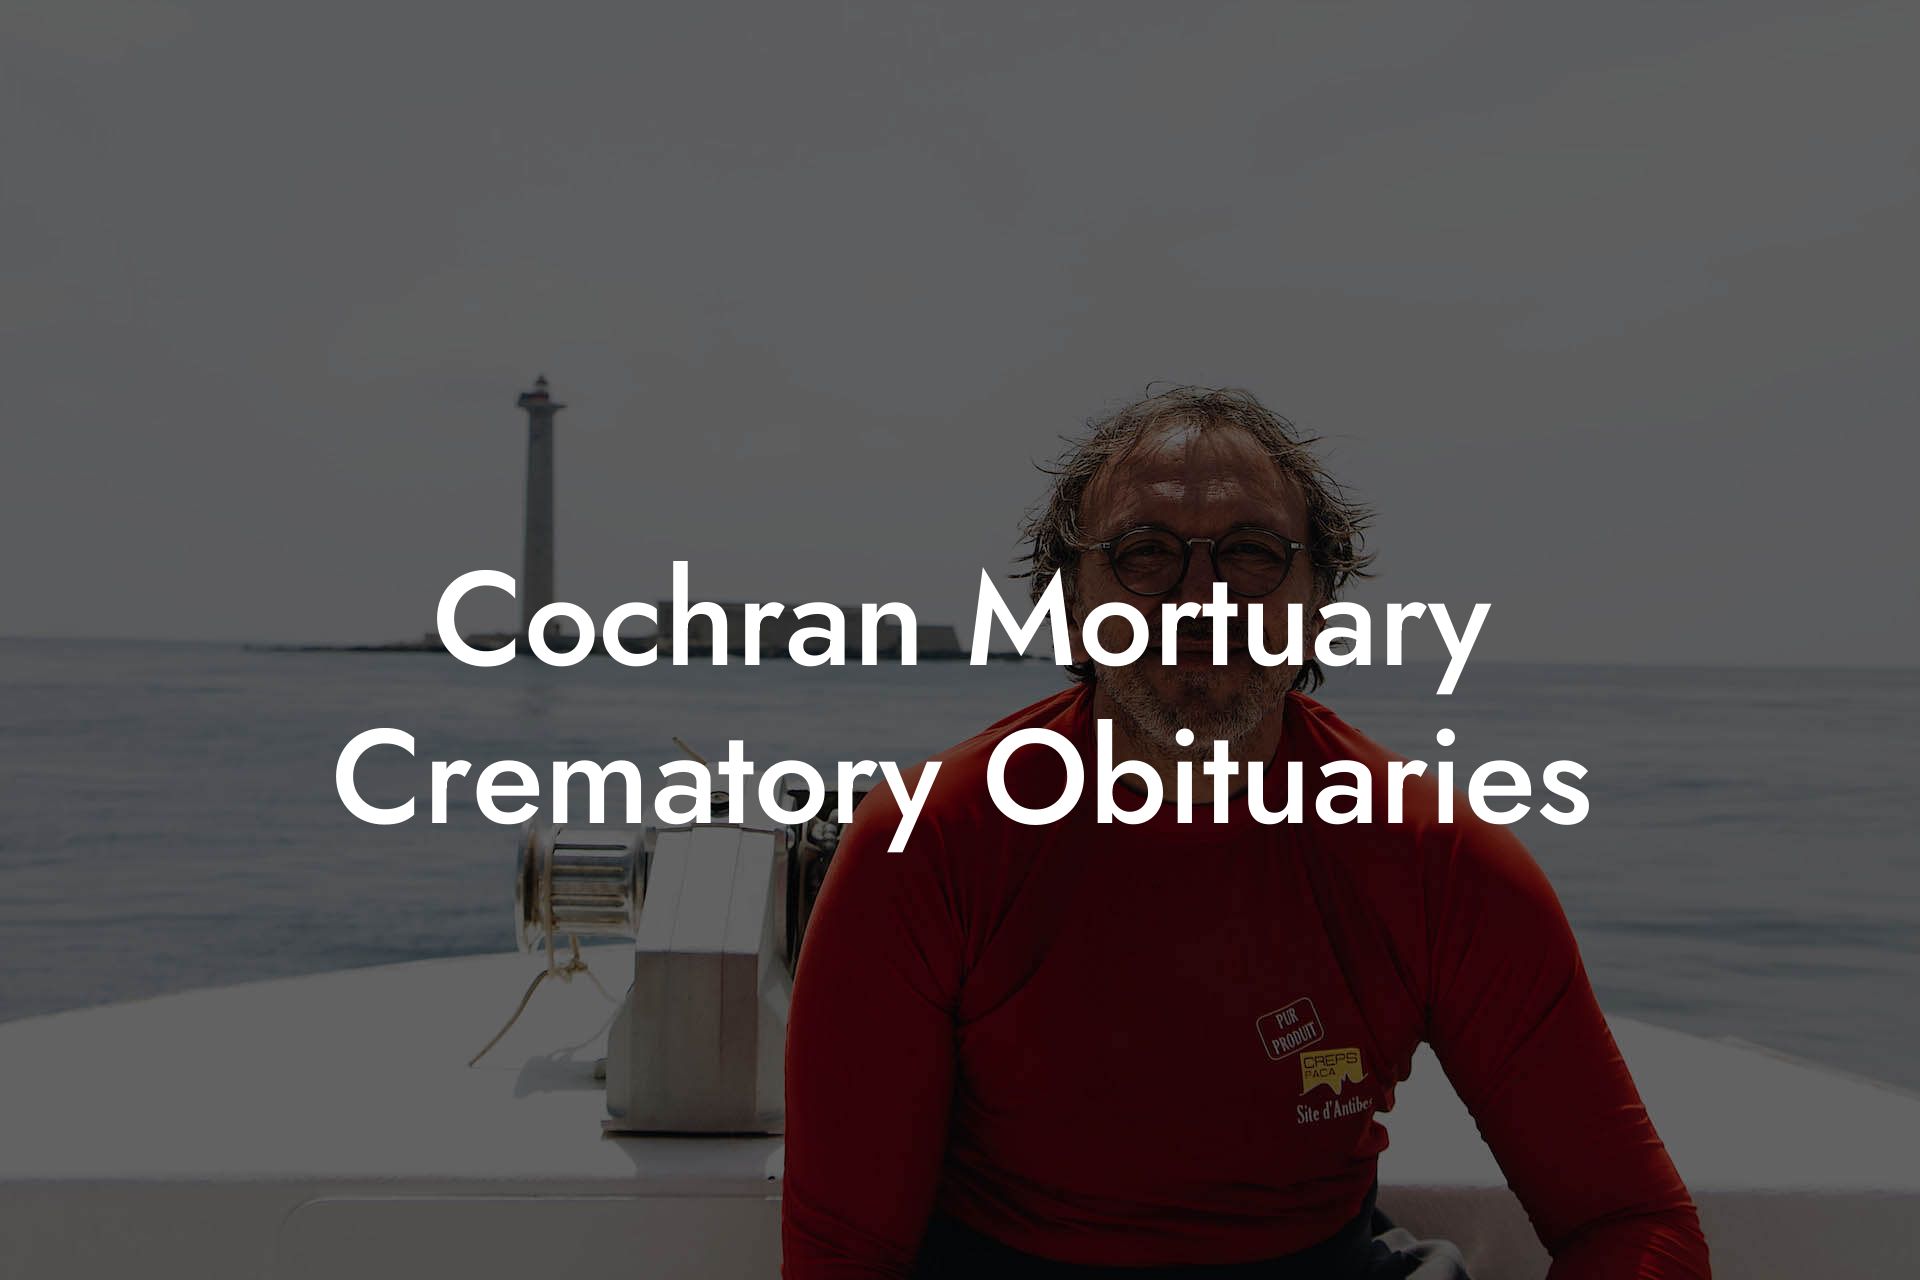 Cochran Mortuary Crematory Obituaries